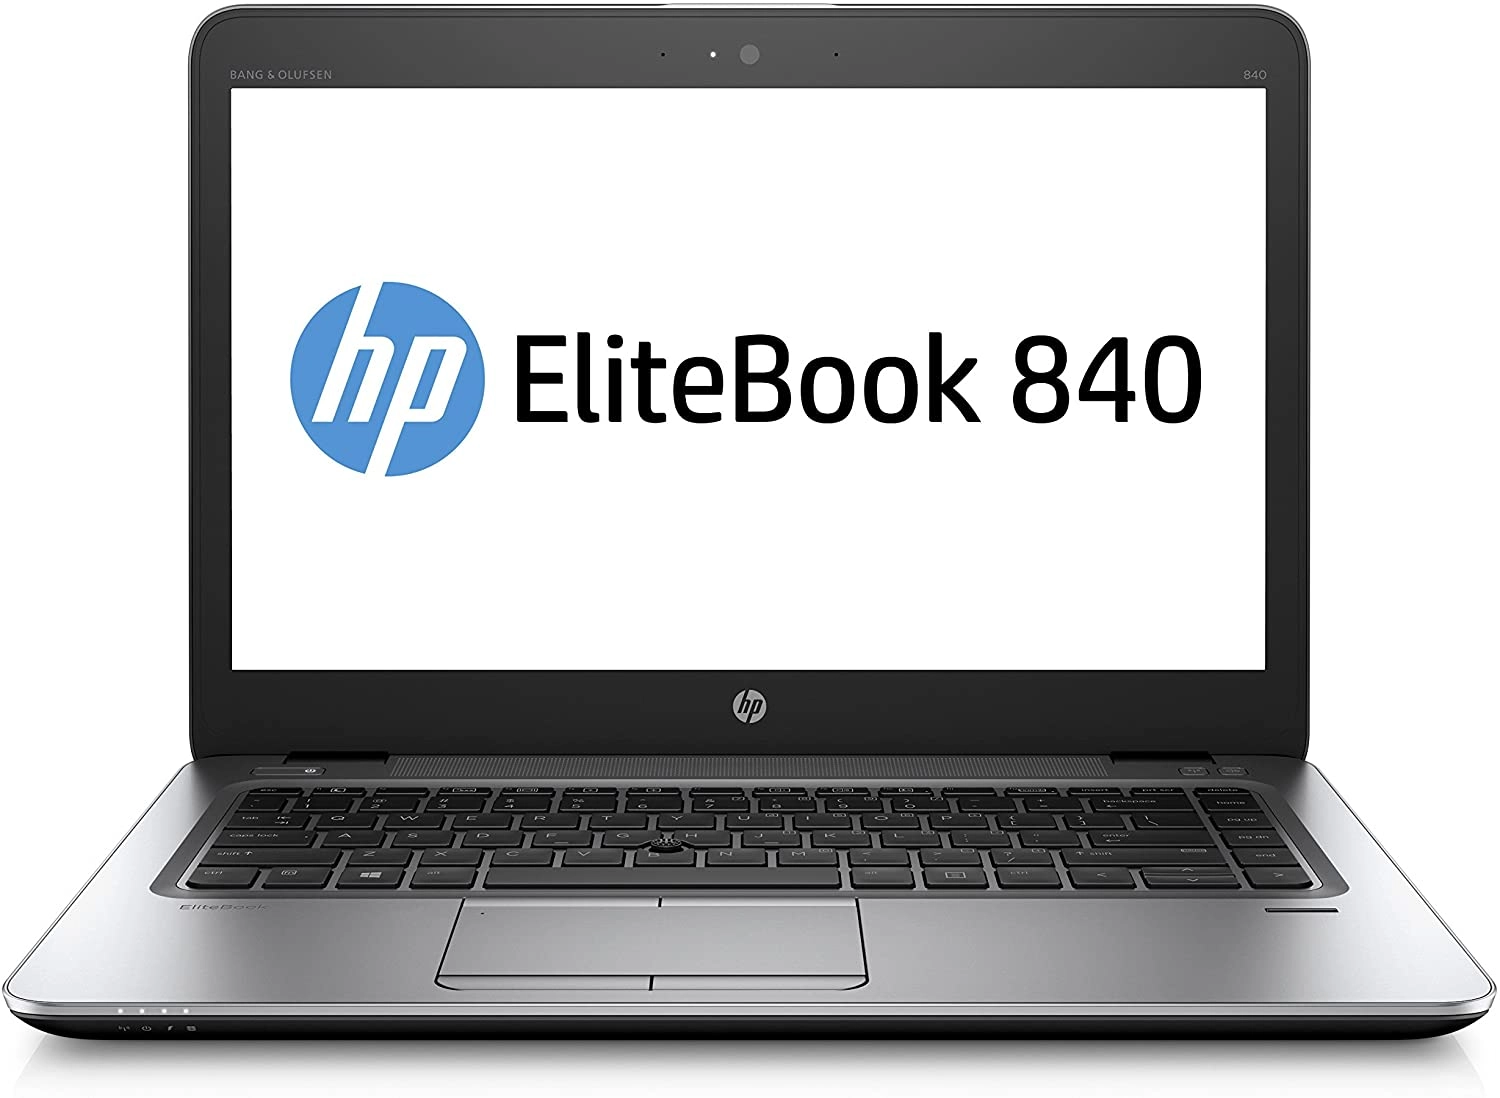 HP EliteBook 840 G3 laptop image